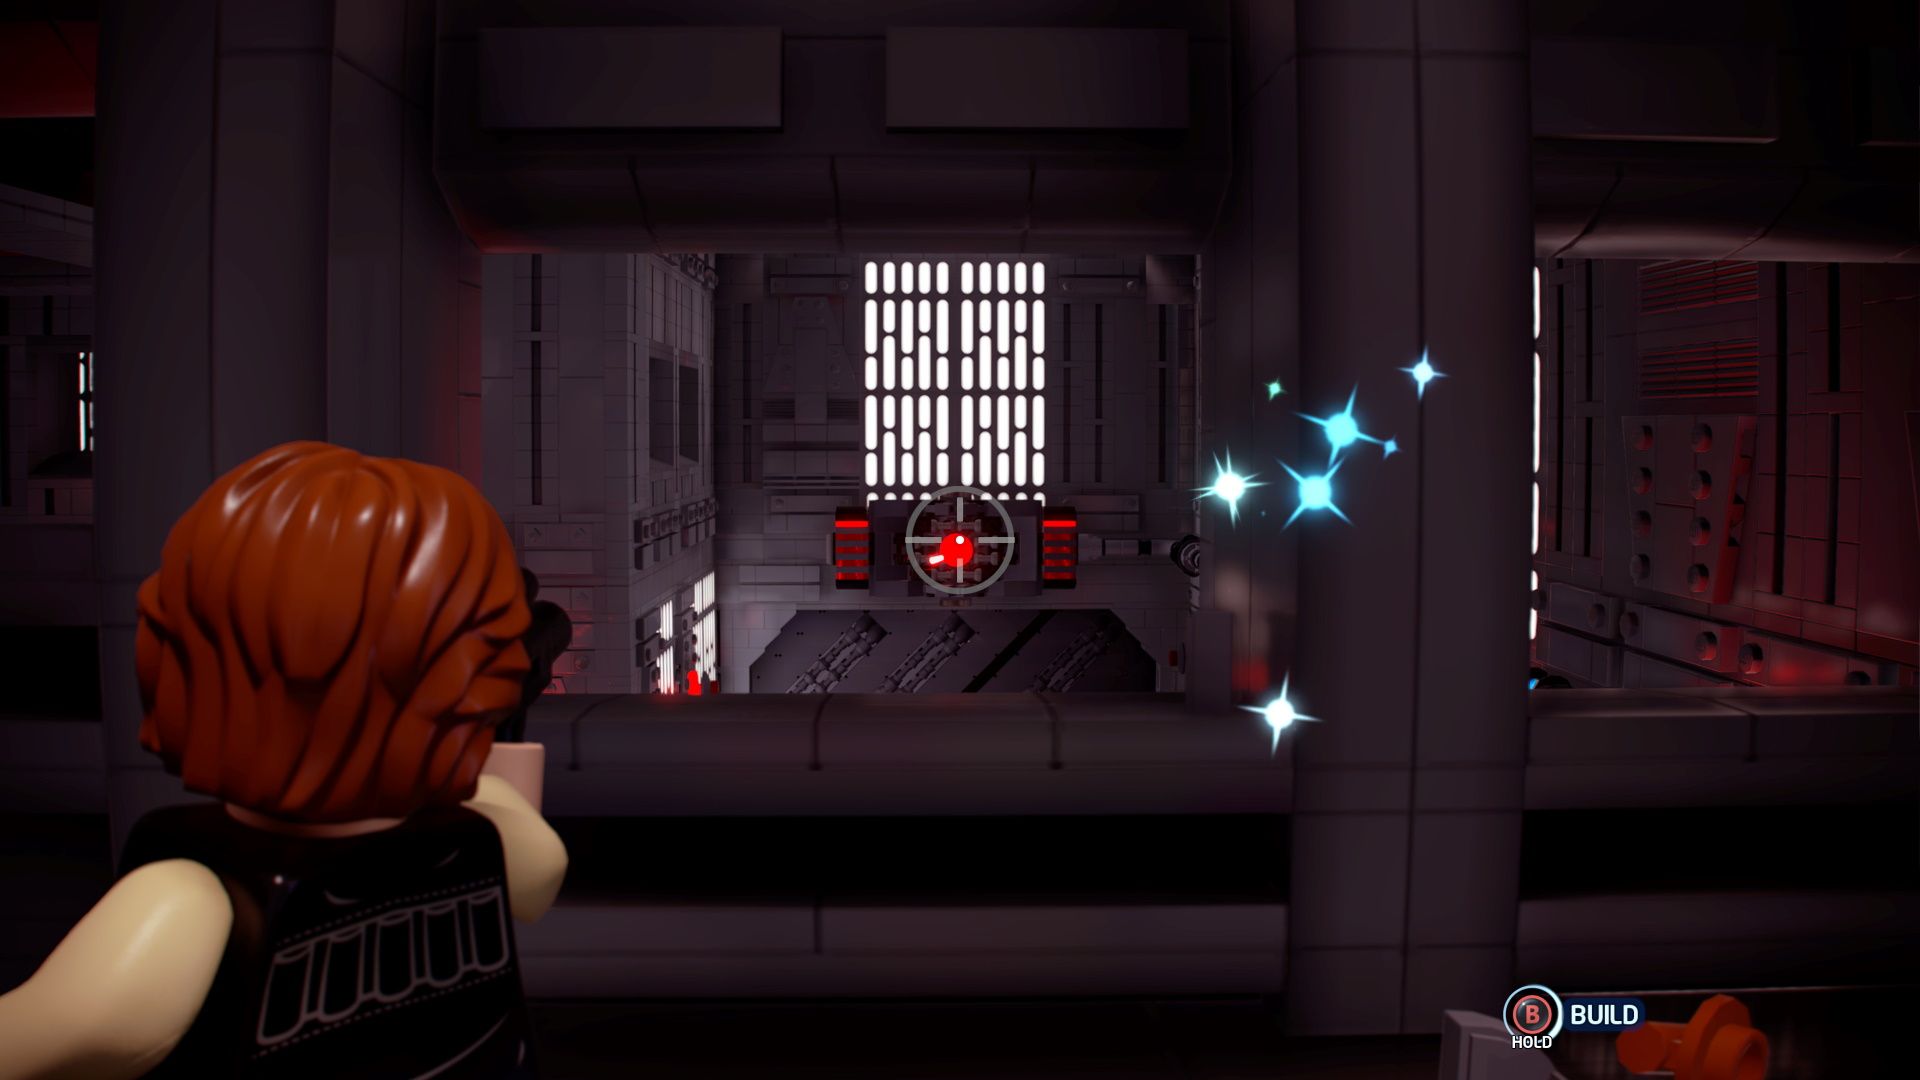 Lego Star Wars Skywalker Saga, Episode 4, This Is Some Rescue, Shooting Button Above Door